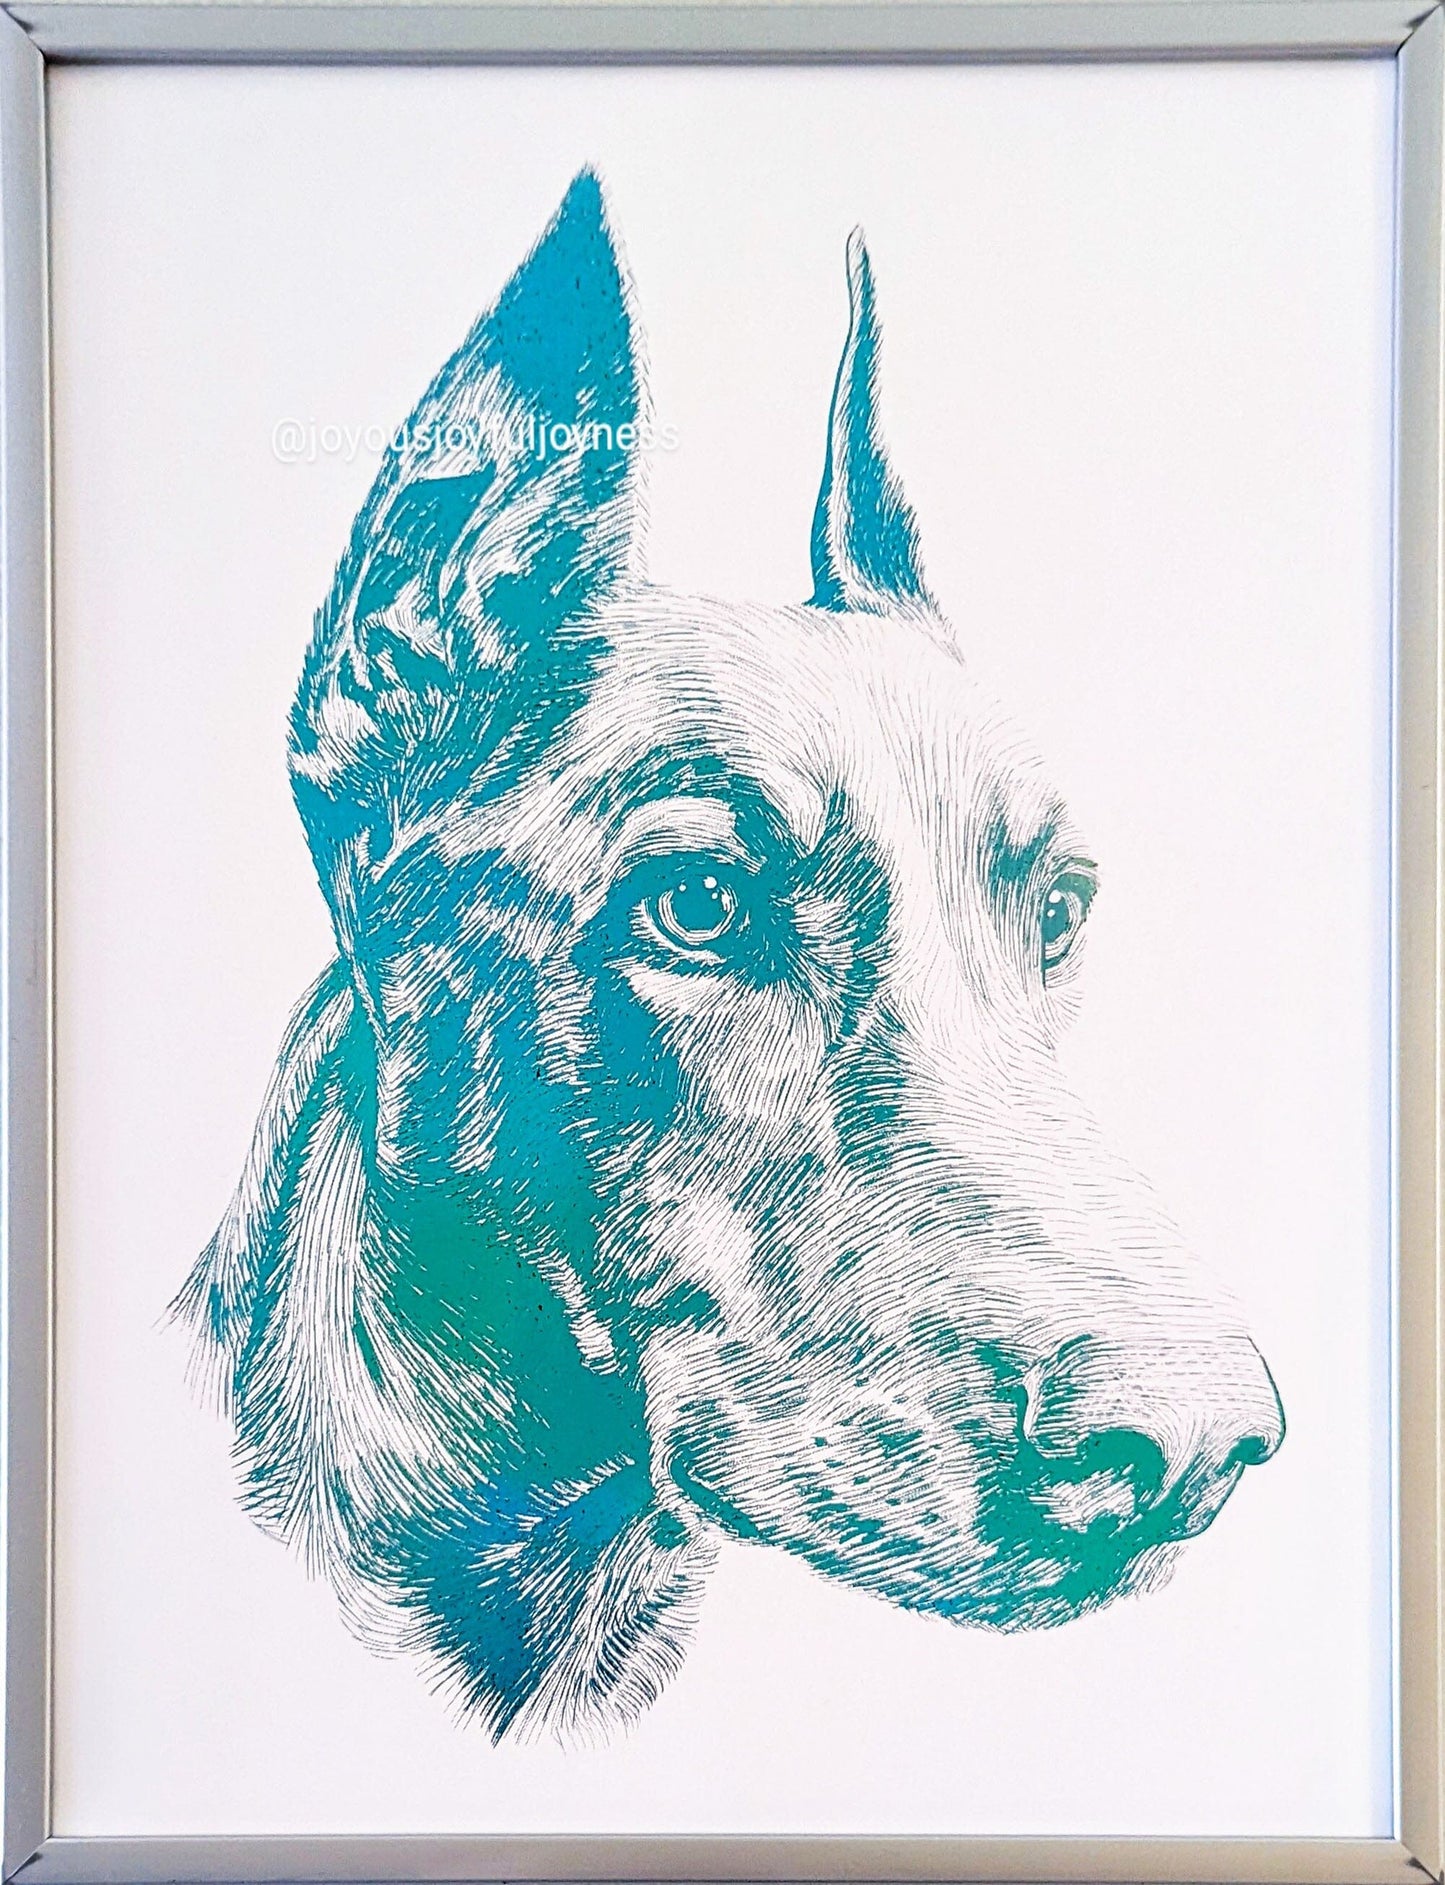 Handmade Dog Portraits Posters, Prints, & Visual Artwork JoyousJoyfulJoyness 